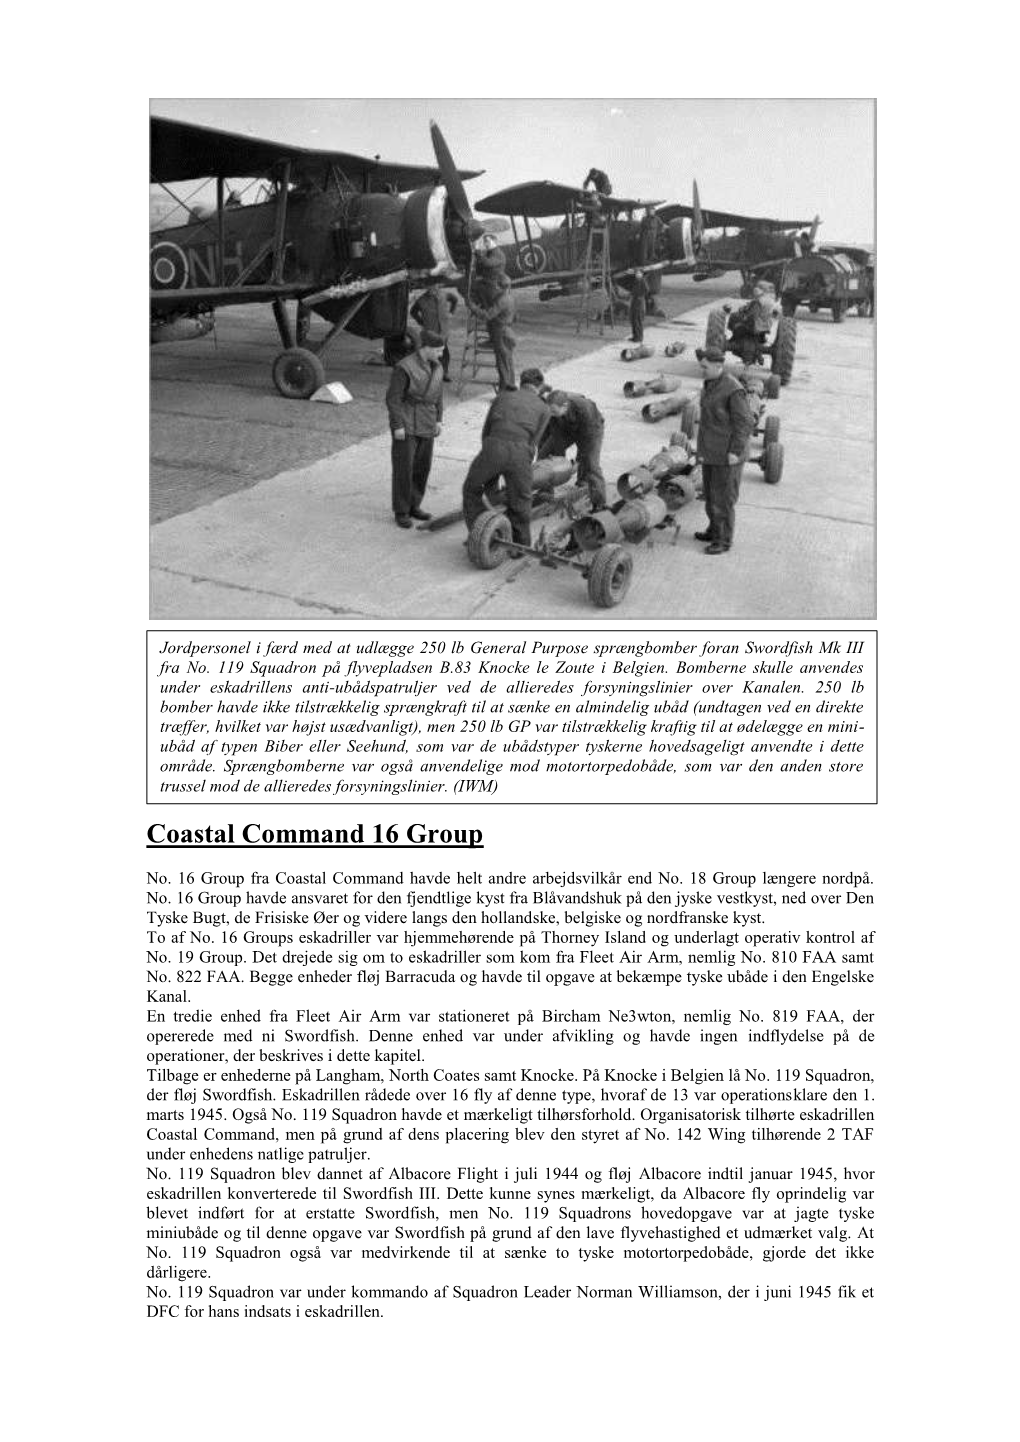 Coastal Command 16 Group